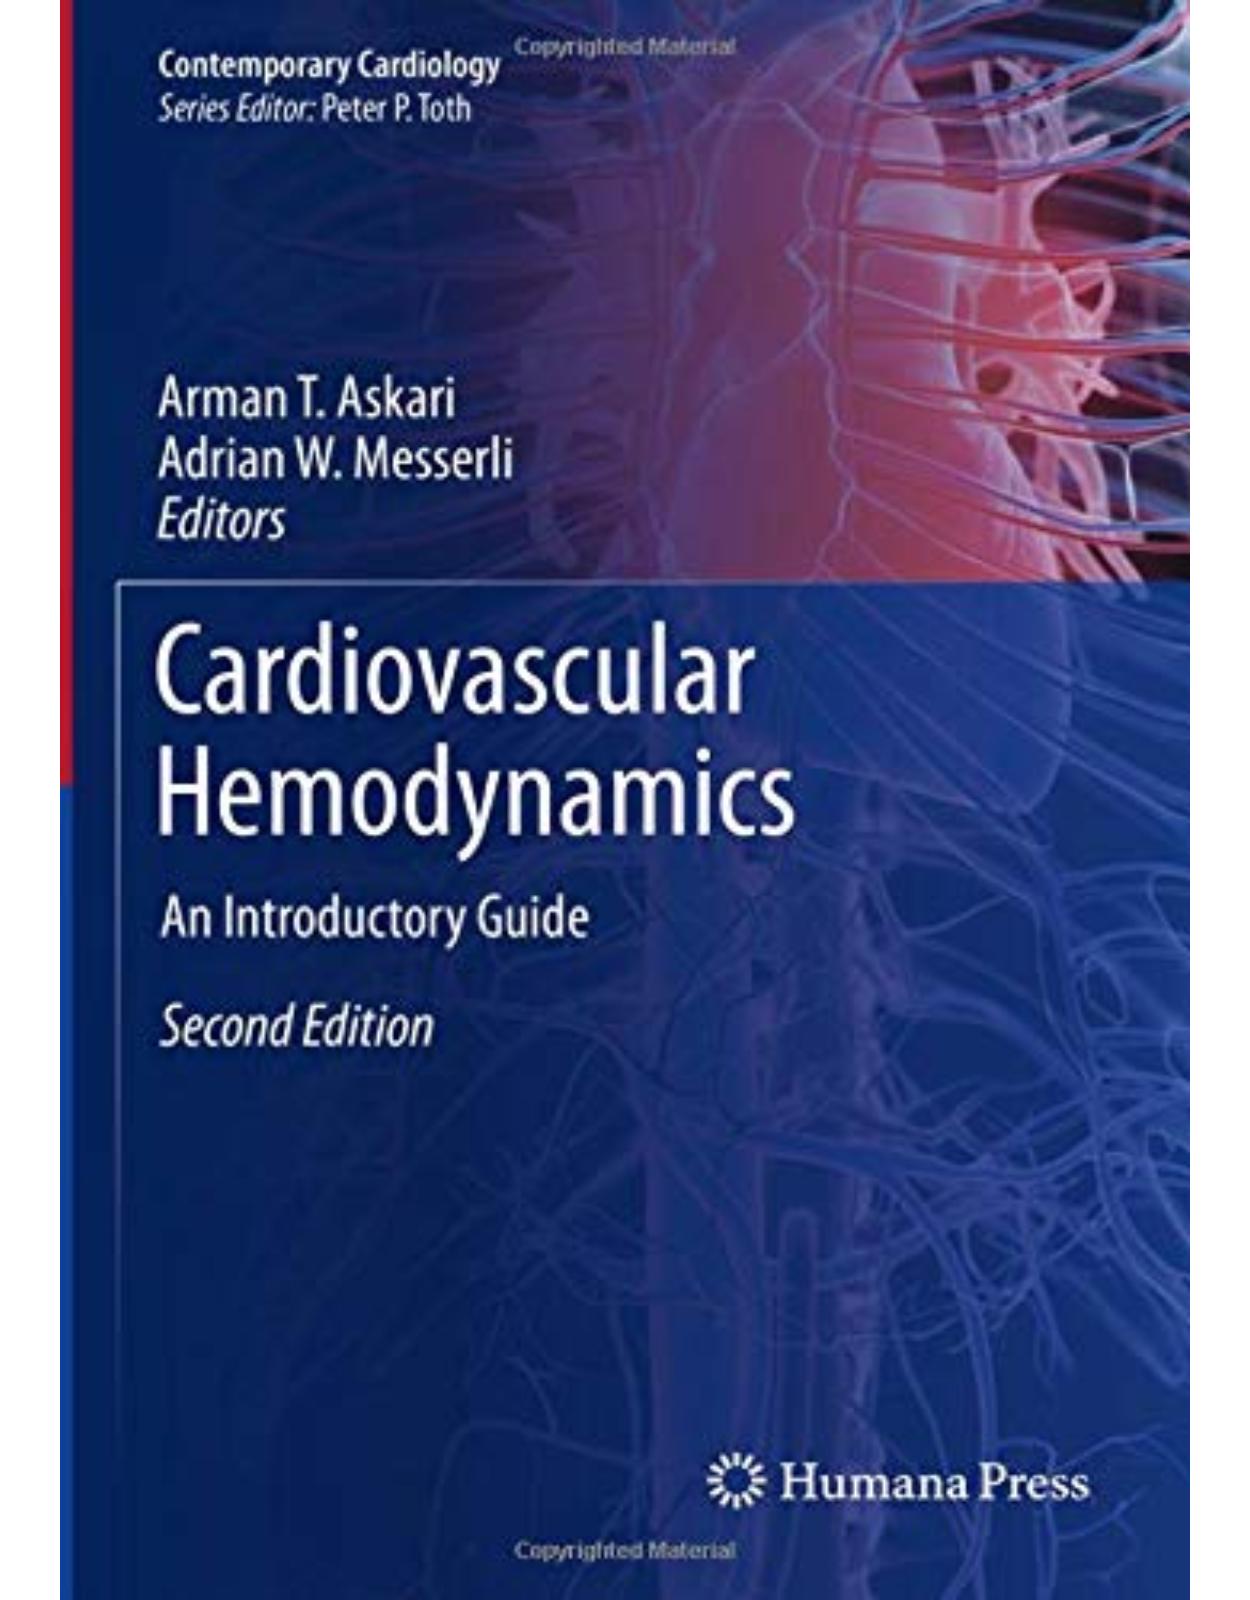 Cardiovascular Hemodynamics: An Introductory Guide (Contemporary Cardiology) 